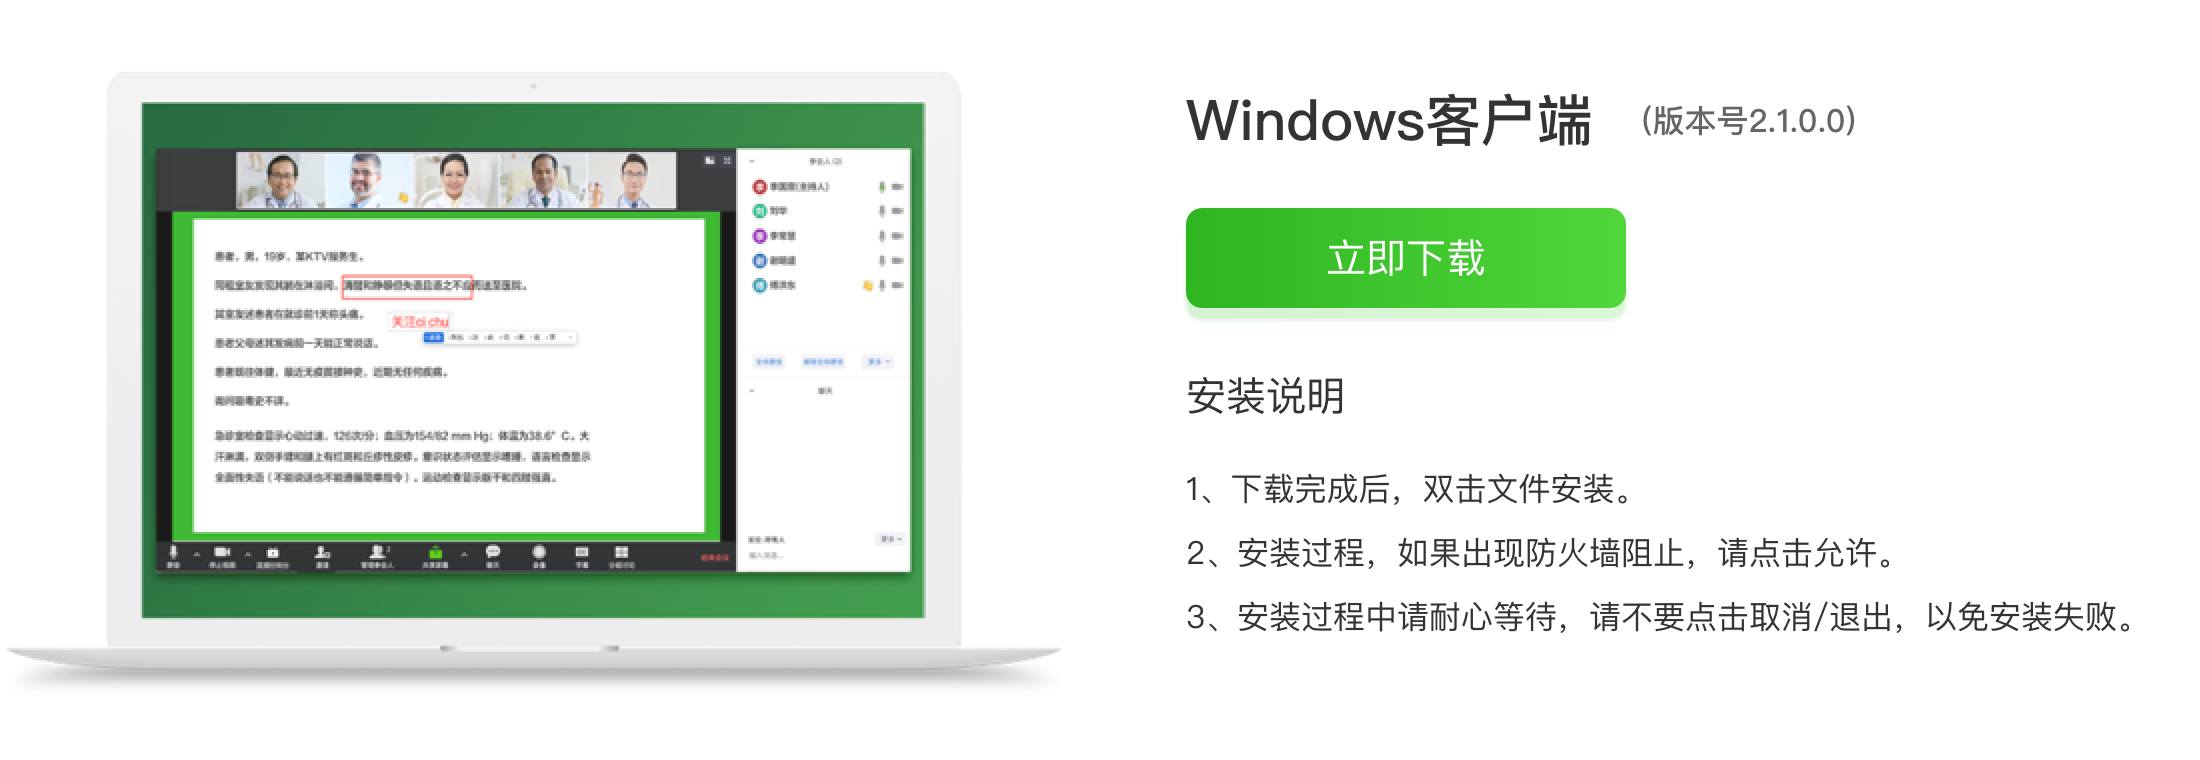 Windows_医百互动.png